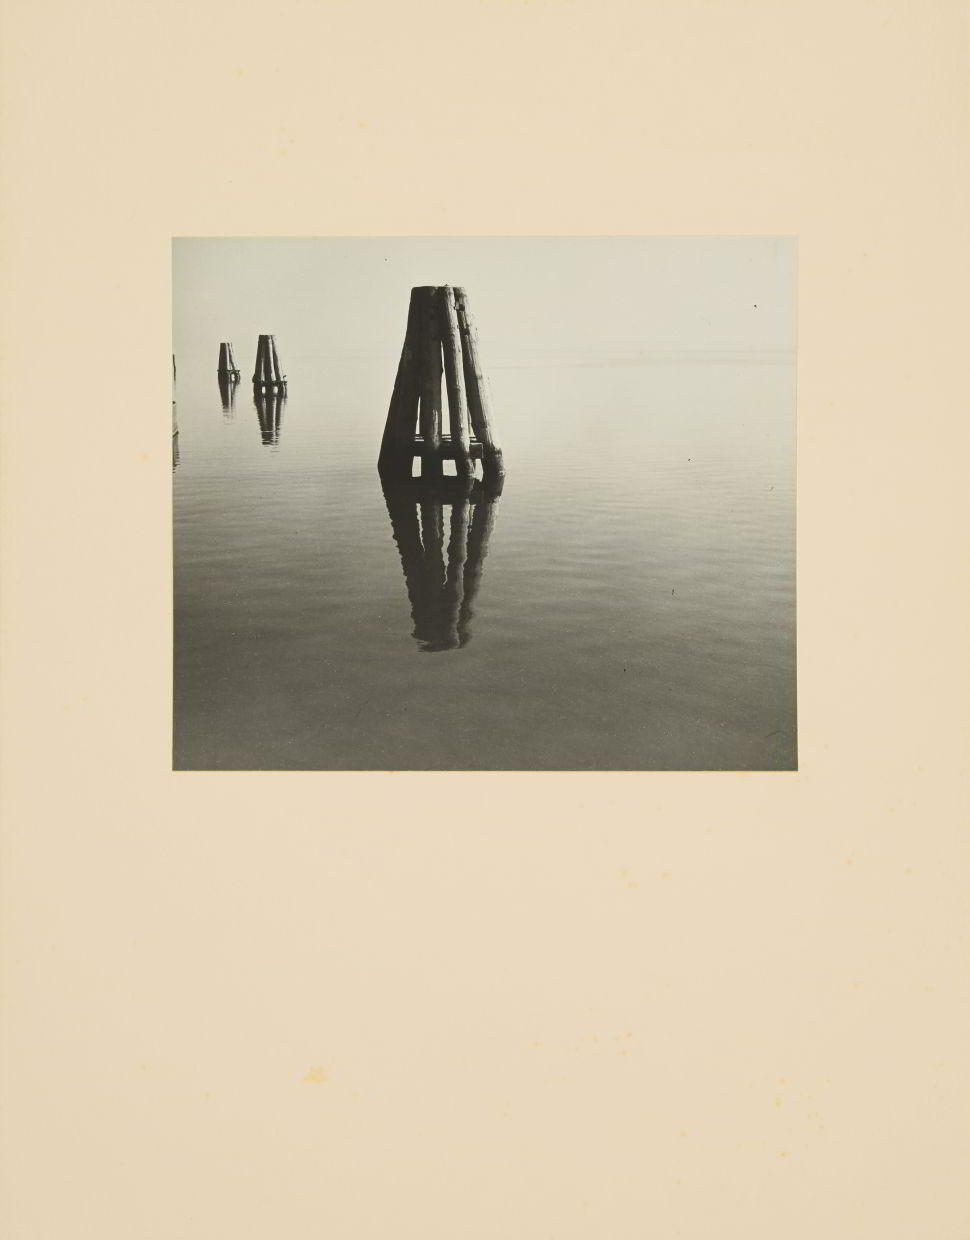 HERBERT LIST (1903–1975) ‘Holzpoller am ruhigen Wasser des Bodensees’ (Wooden poles in the calm waters of Lake Constance), 1934